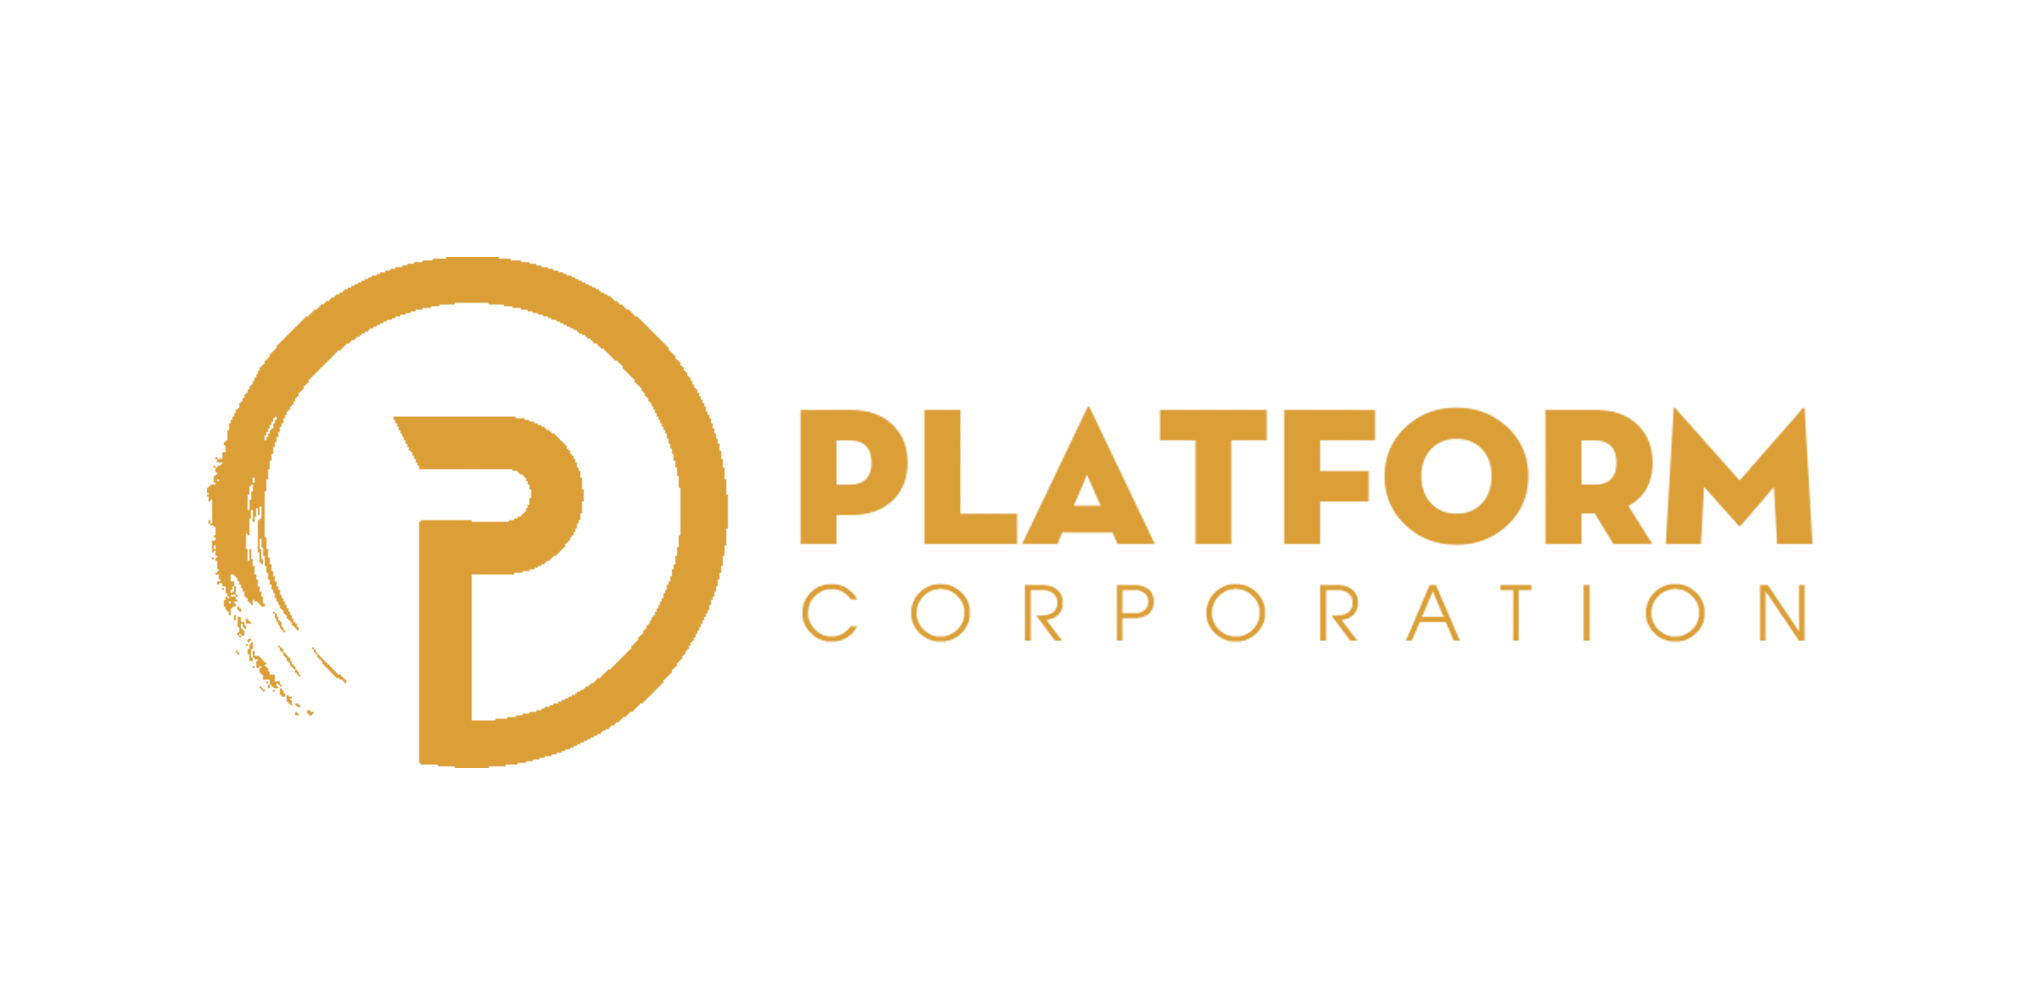 Platform Corporation